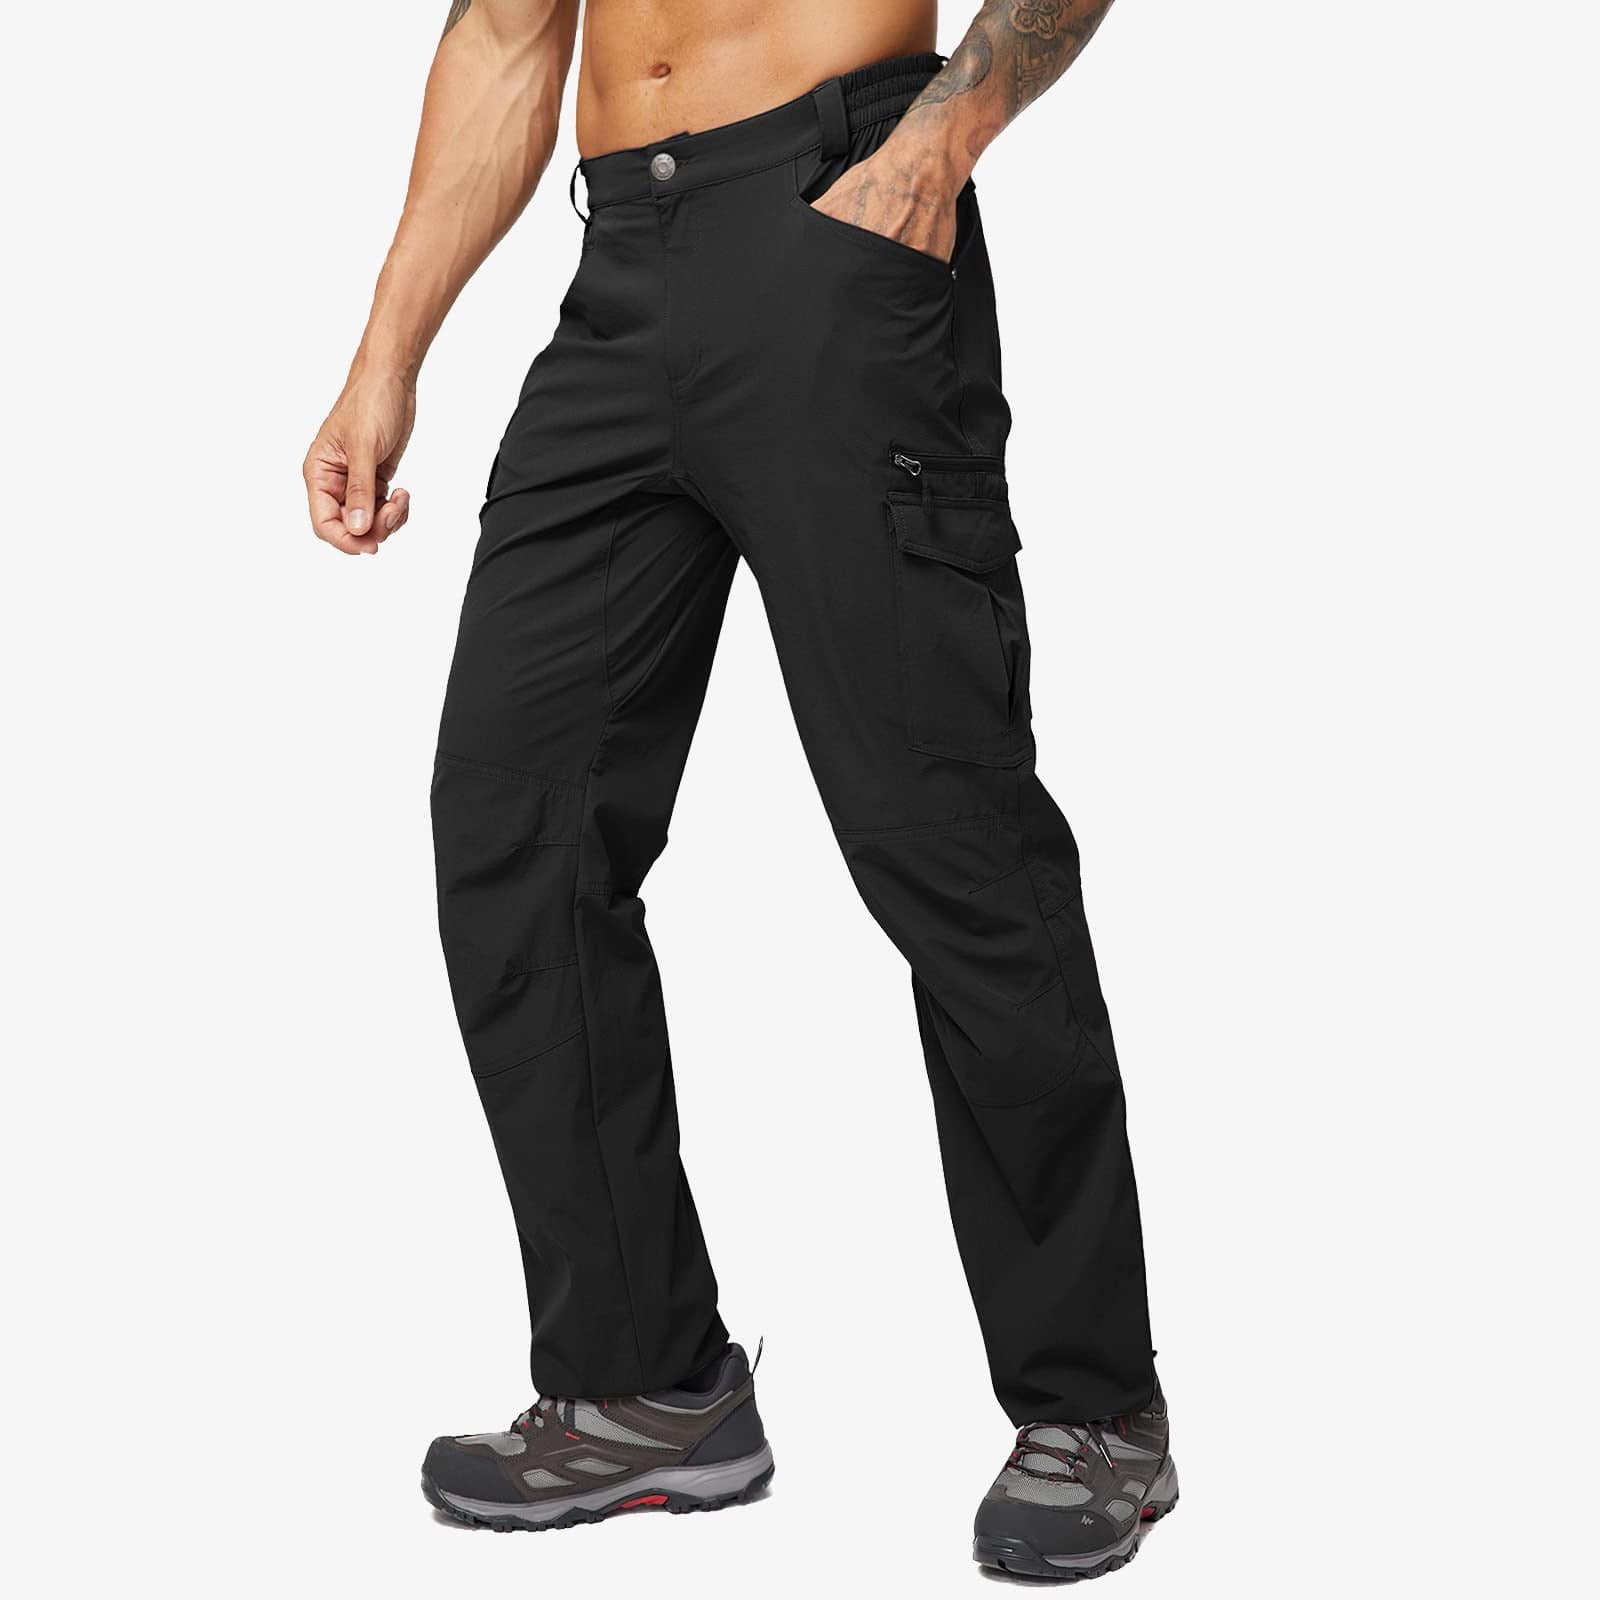 MIER Men's Stretch Hiking Pants Quick Dry Cargo Pants, Black / 40